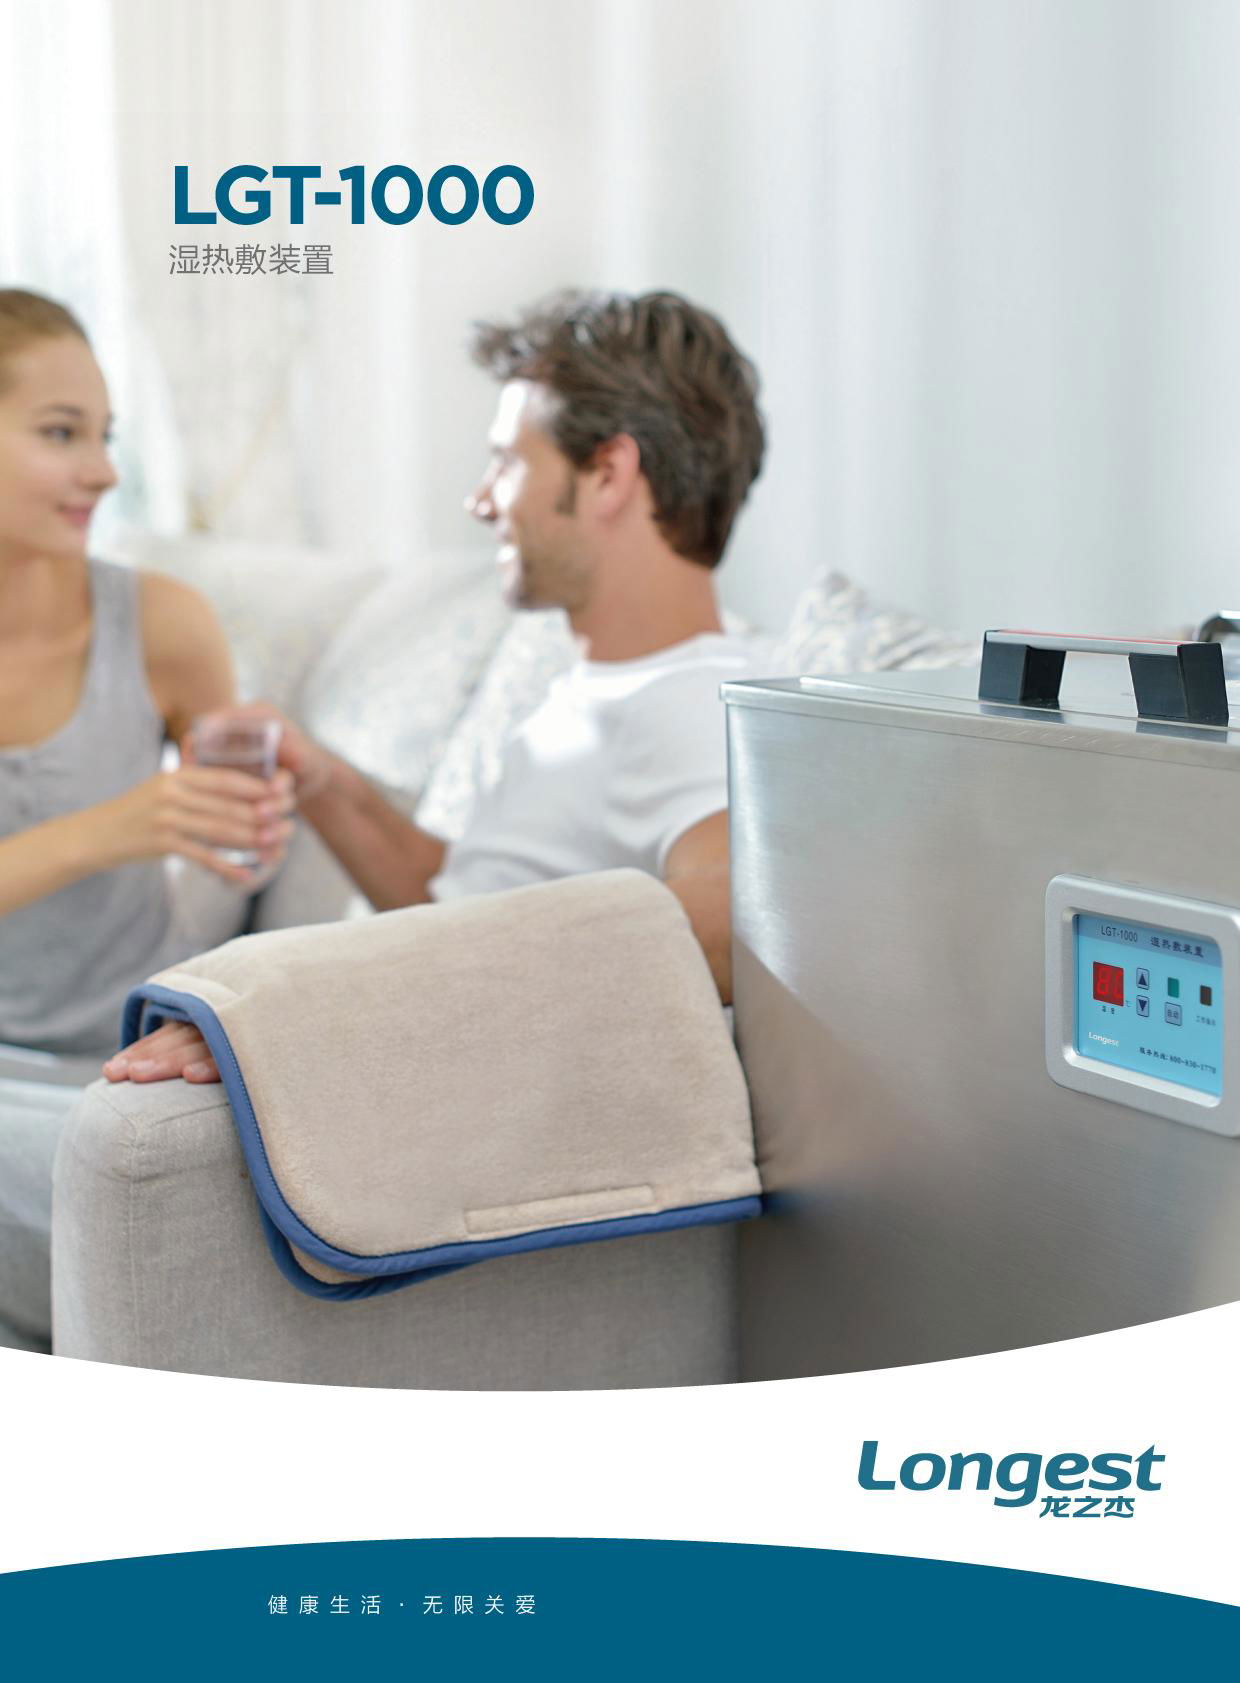 Damp heat compress treatment system 2